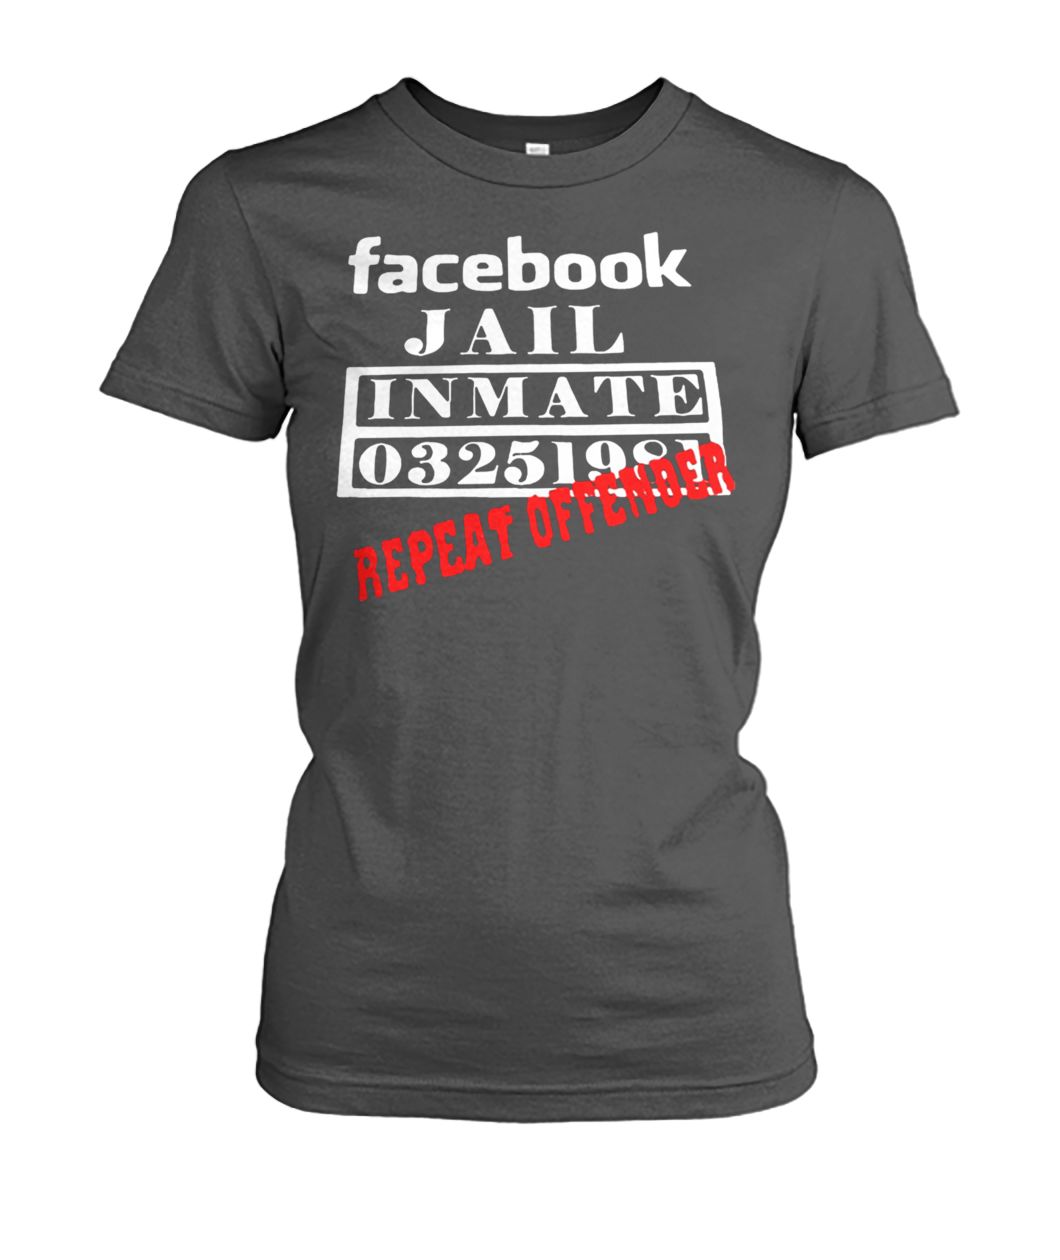 Facebook Jail inmate 03251981 repeat offender women's crew tee